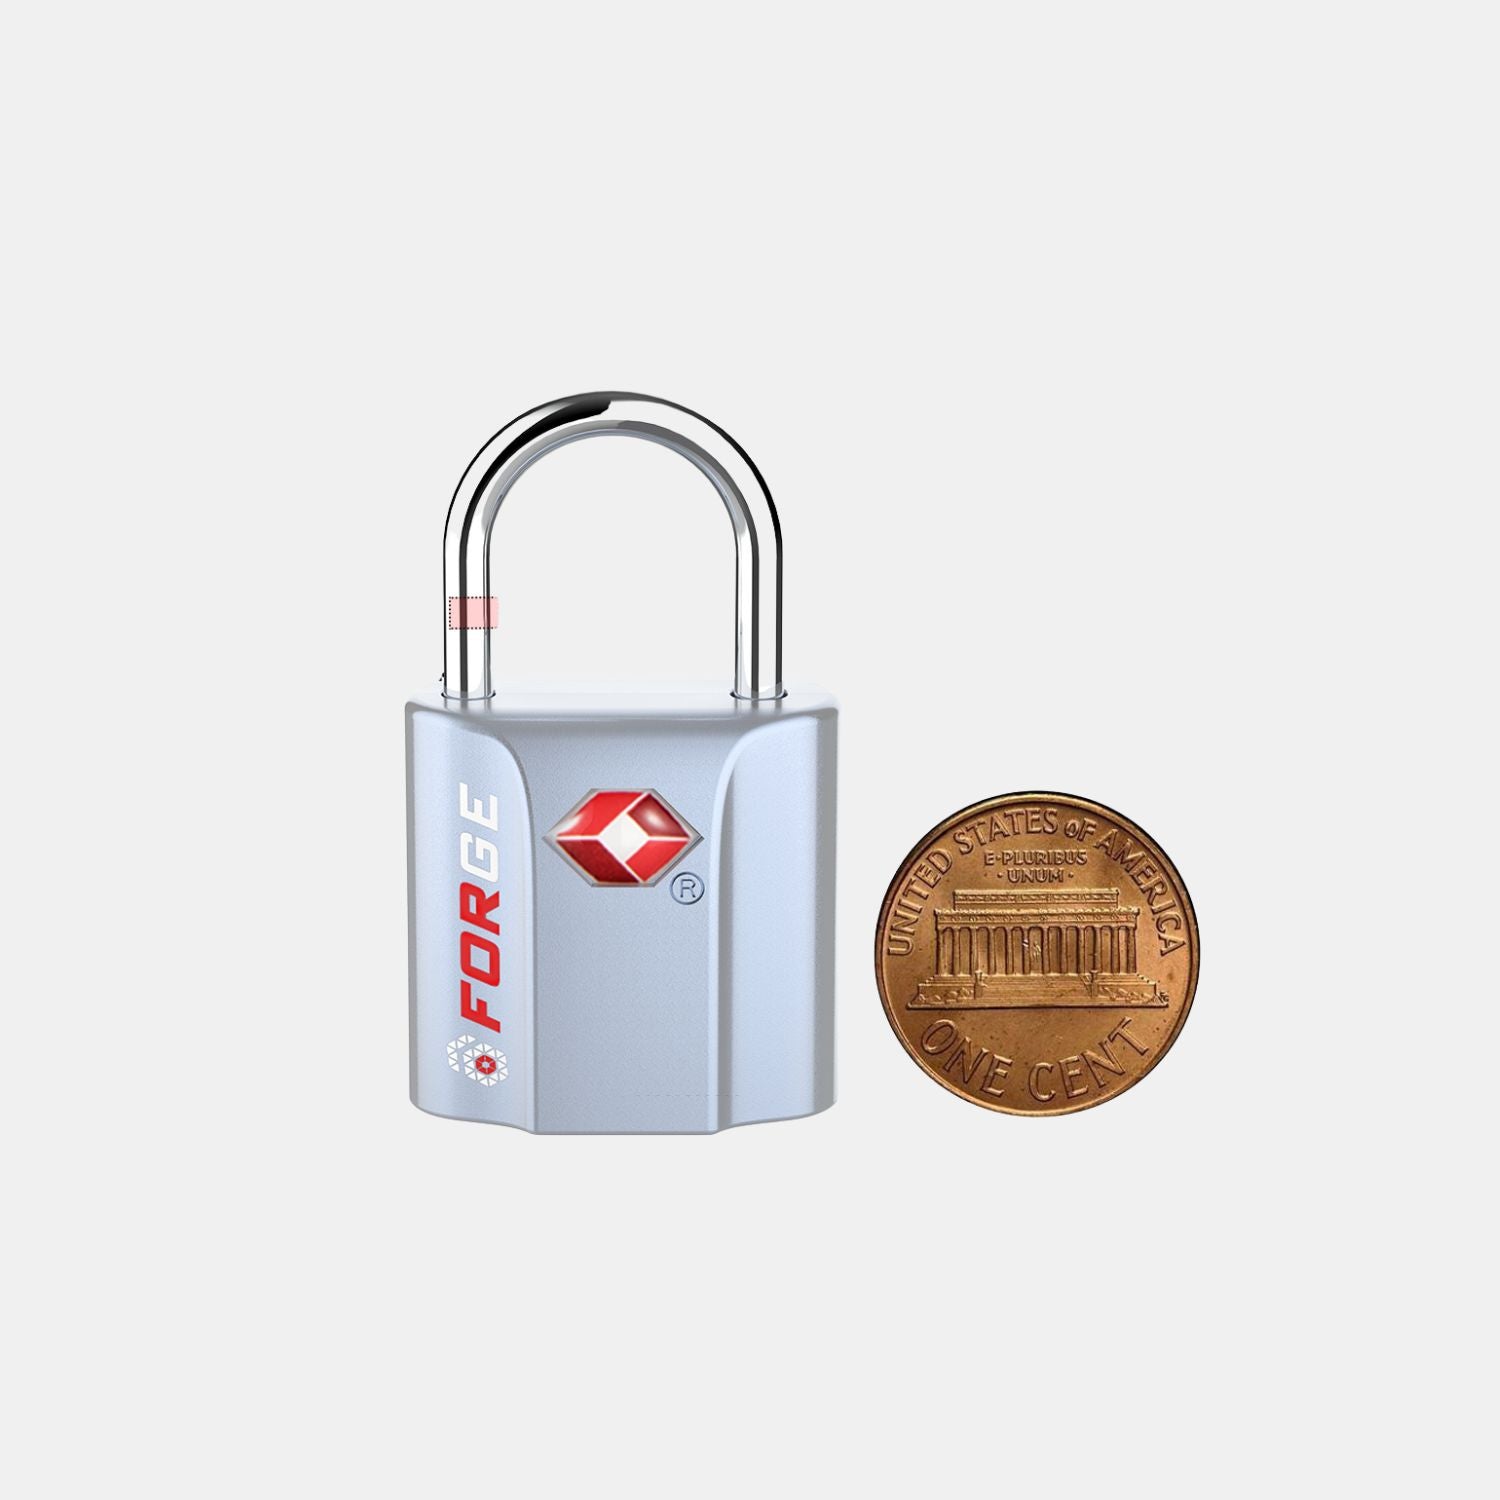 TSA Approved Dimple Key Luggage Lock - TSA006 Key, Ultra-Secure Small Size Lock. Silver 2 Locks